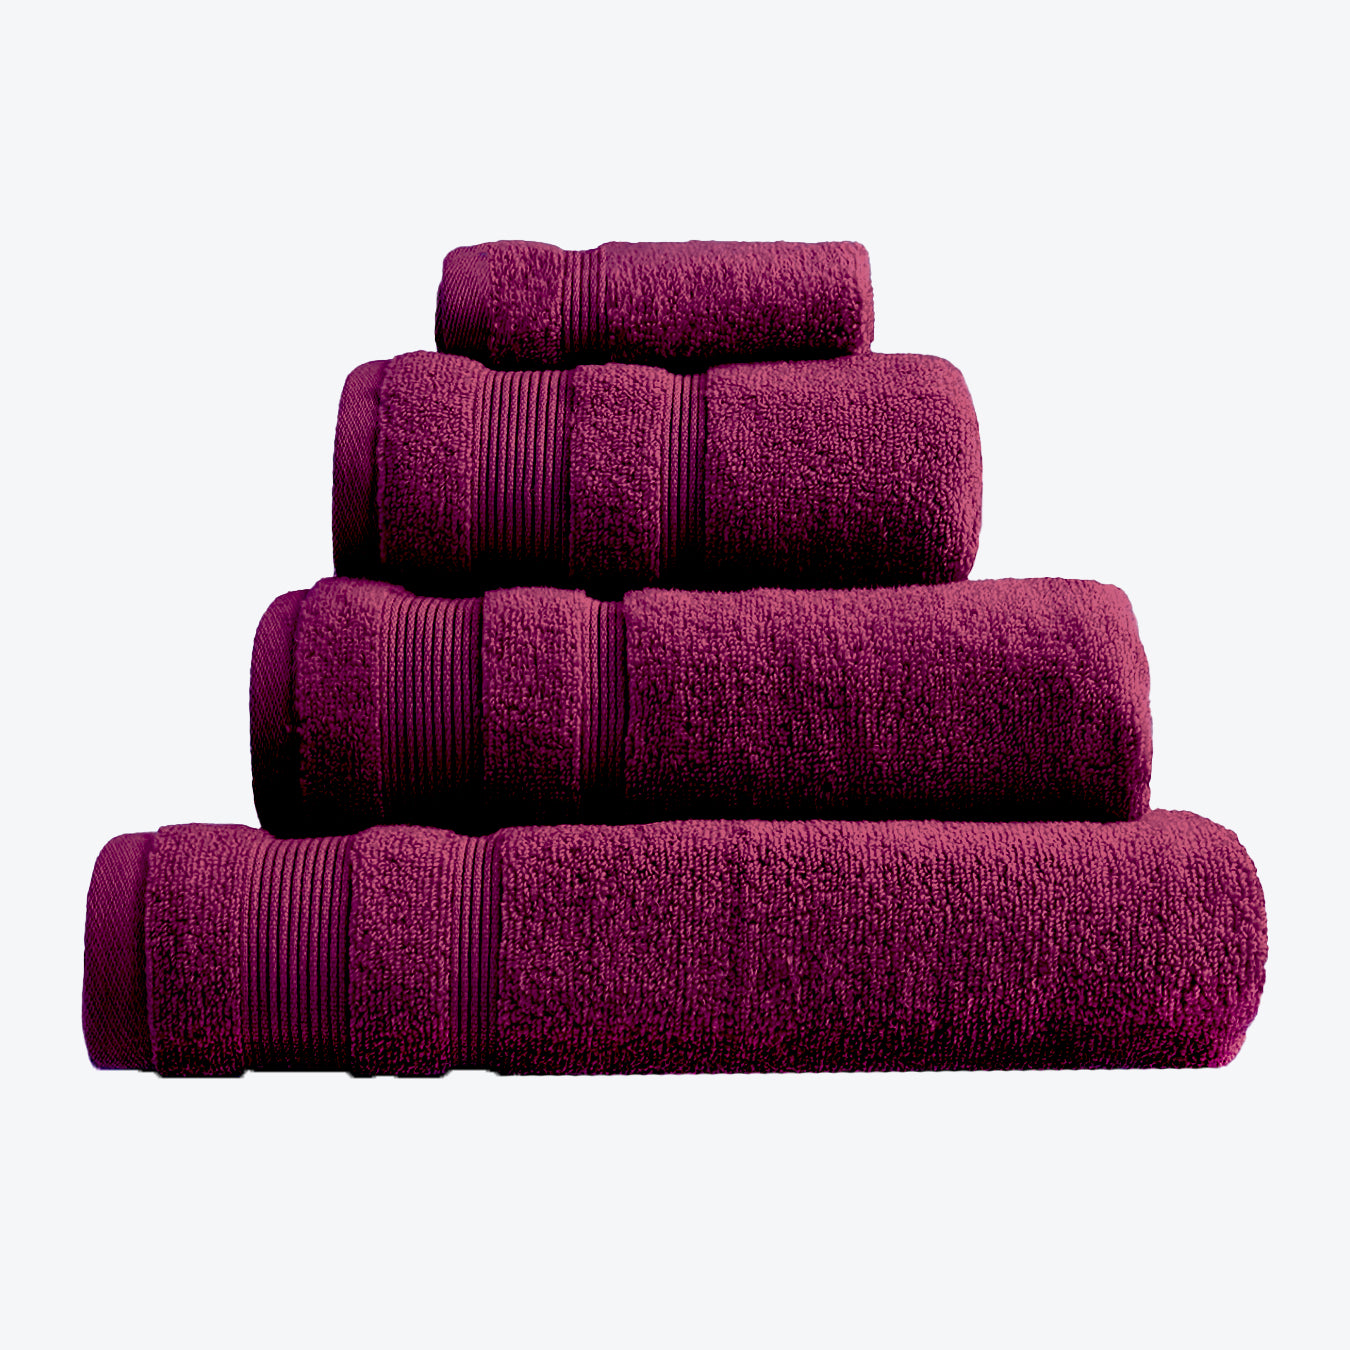 Beetroot Purple Egyptian Cotton Towel Bale Set - Premium Zero Twist Bathroom Towels (Hand Towel, Bath Towel, Bath Sheet, face Cloths).